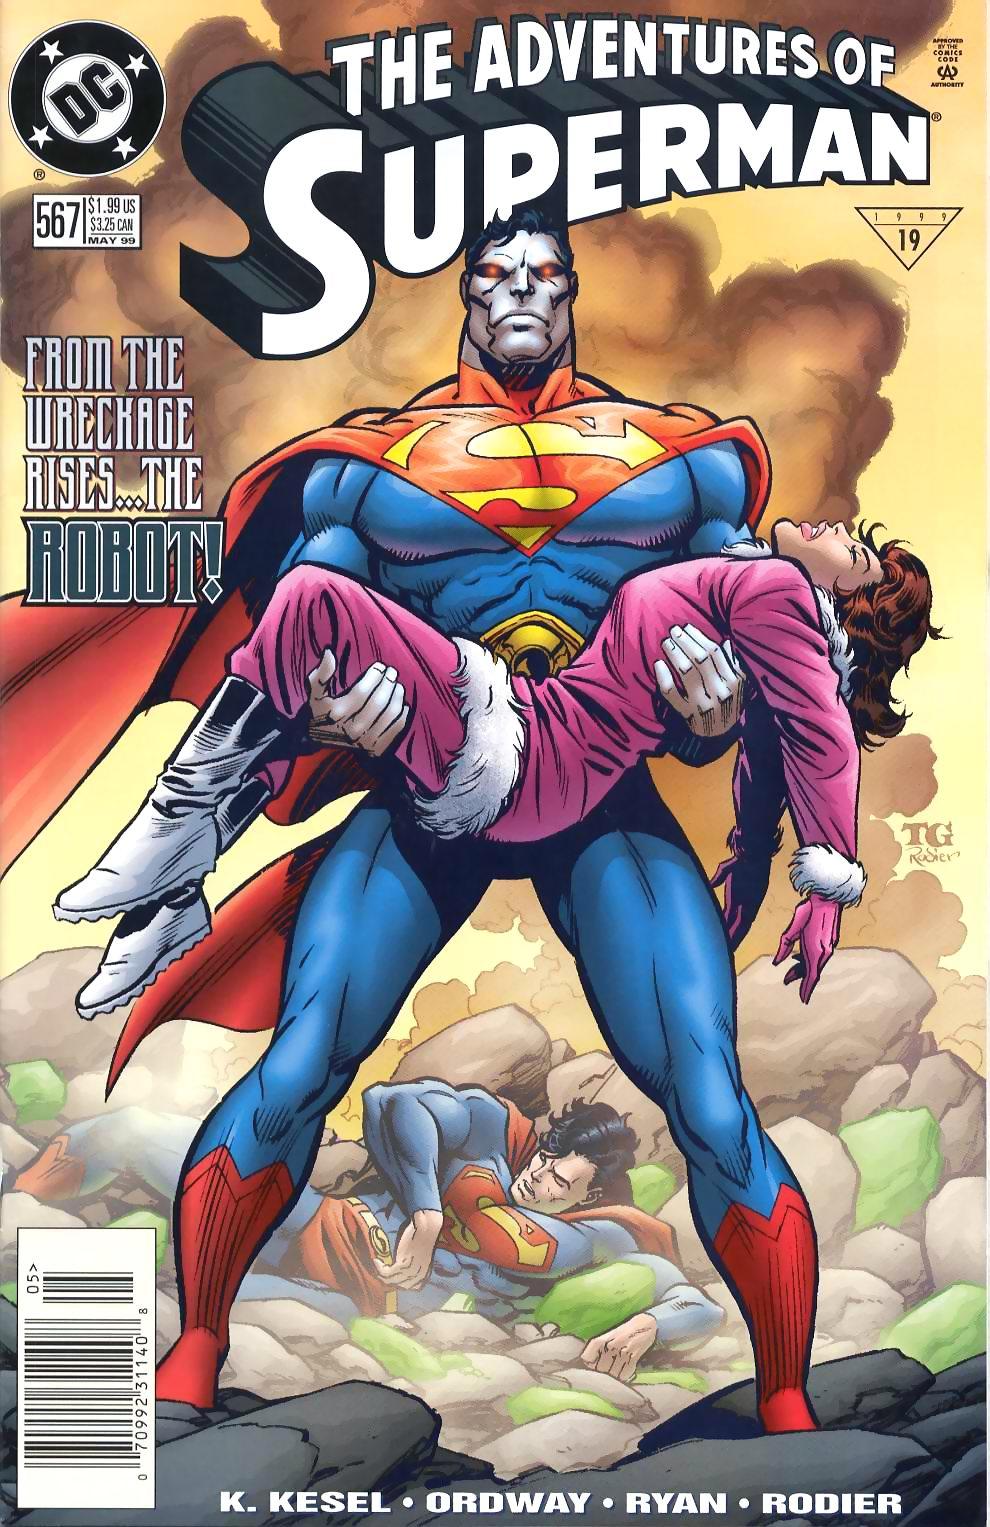 The Adventures of Superman Vol. 1 #567